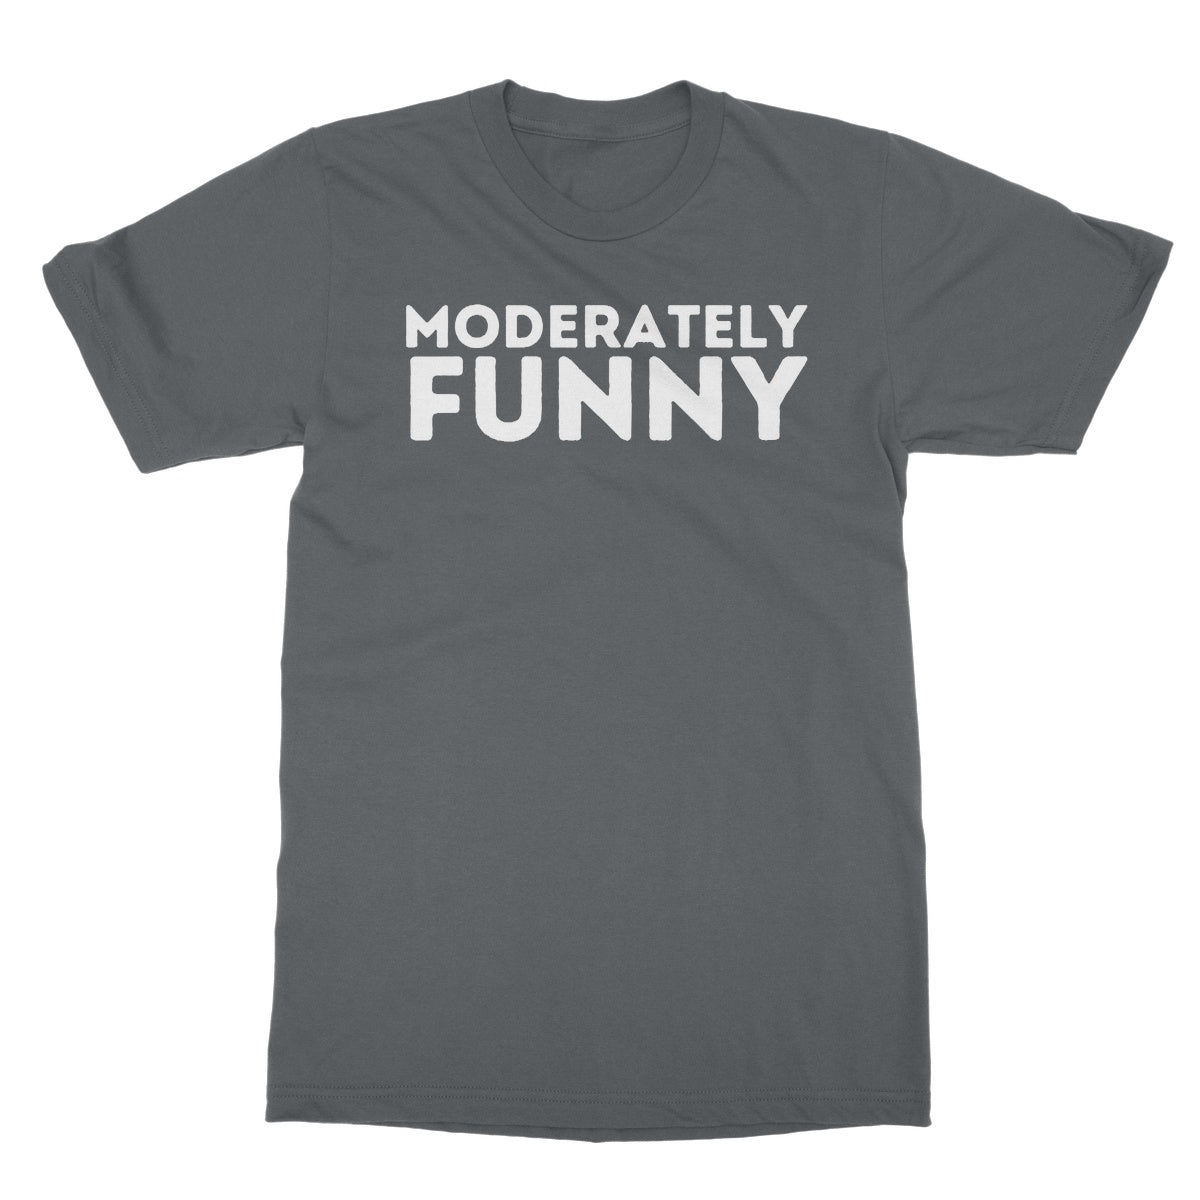 moderately funny t shirt grey